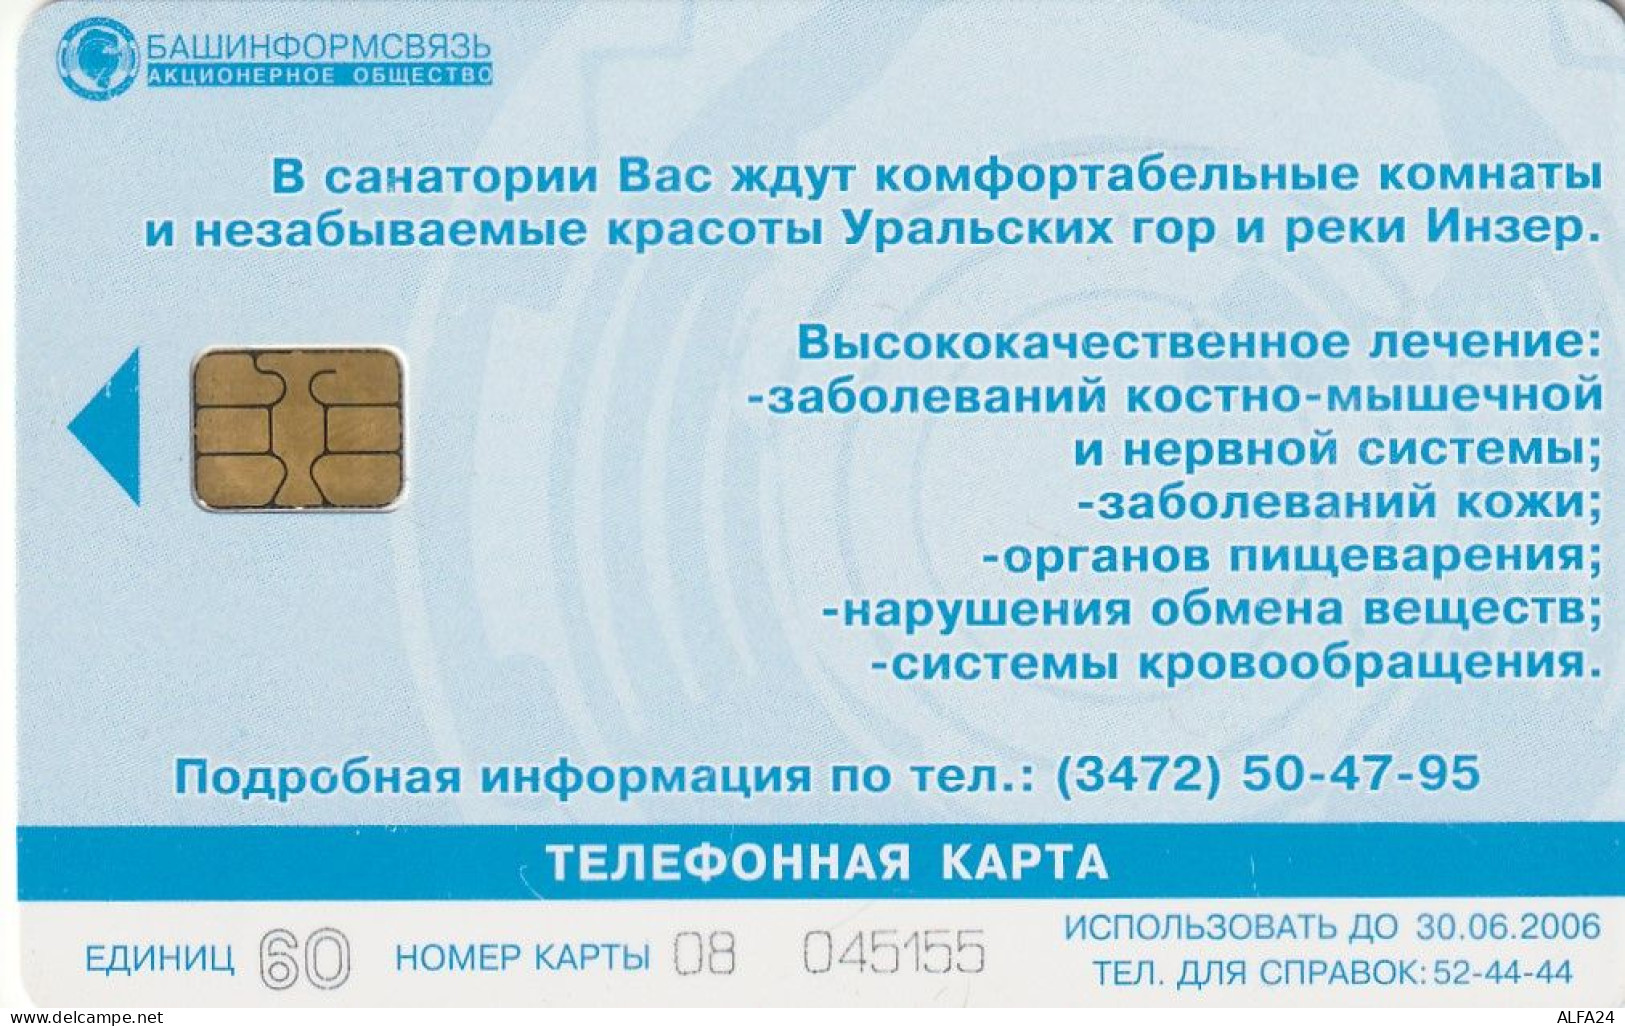 PHONE CARD RUSSIA Bashinformsvyaz - Ufa (E9.25.6 - Russie